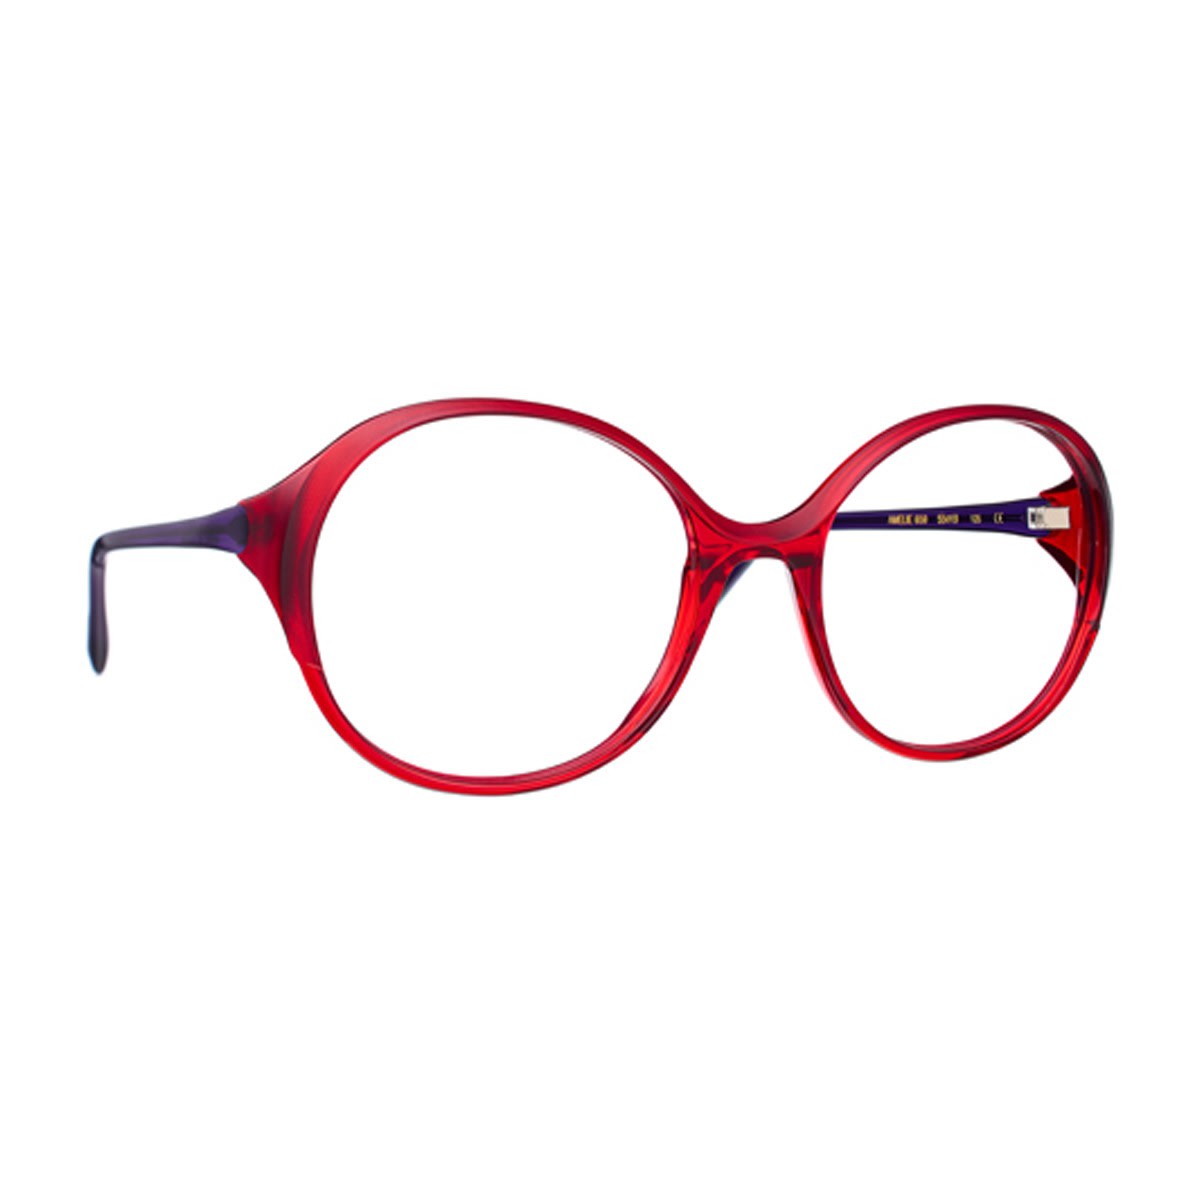 Amelie Glasses